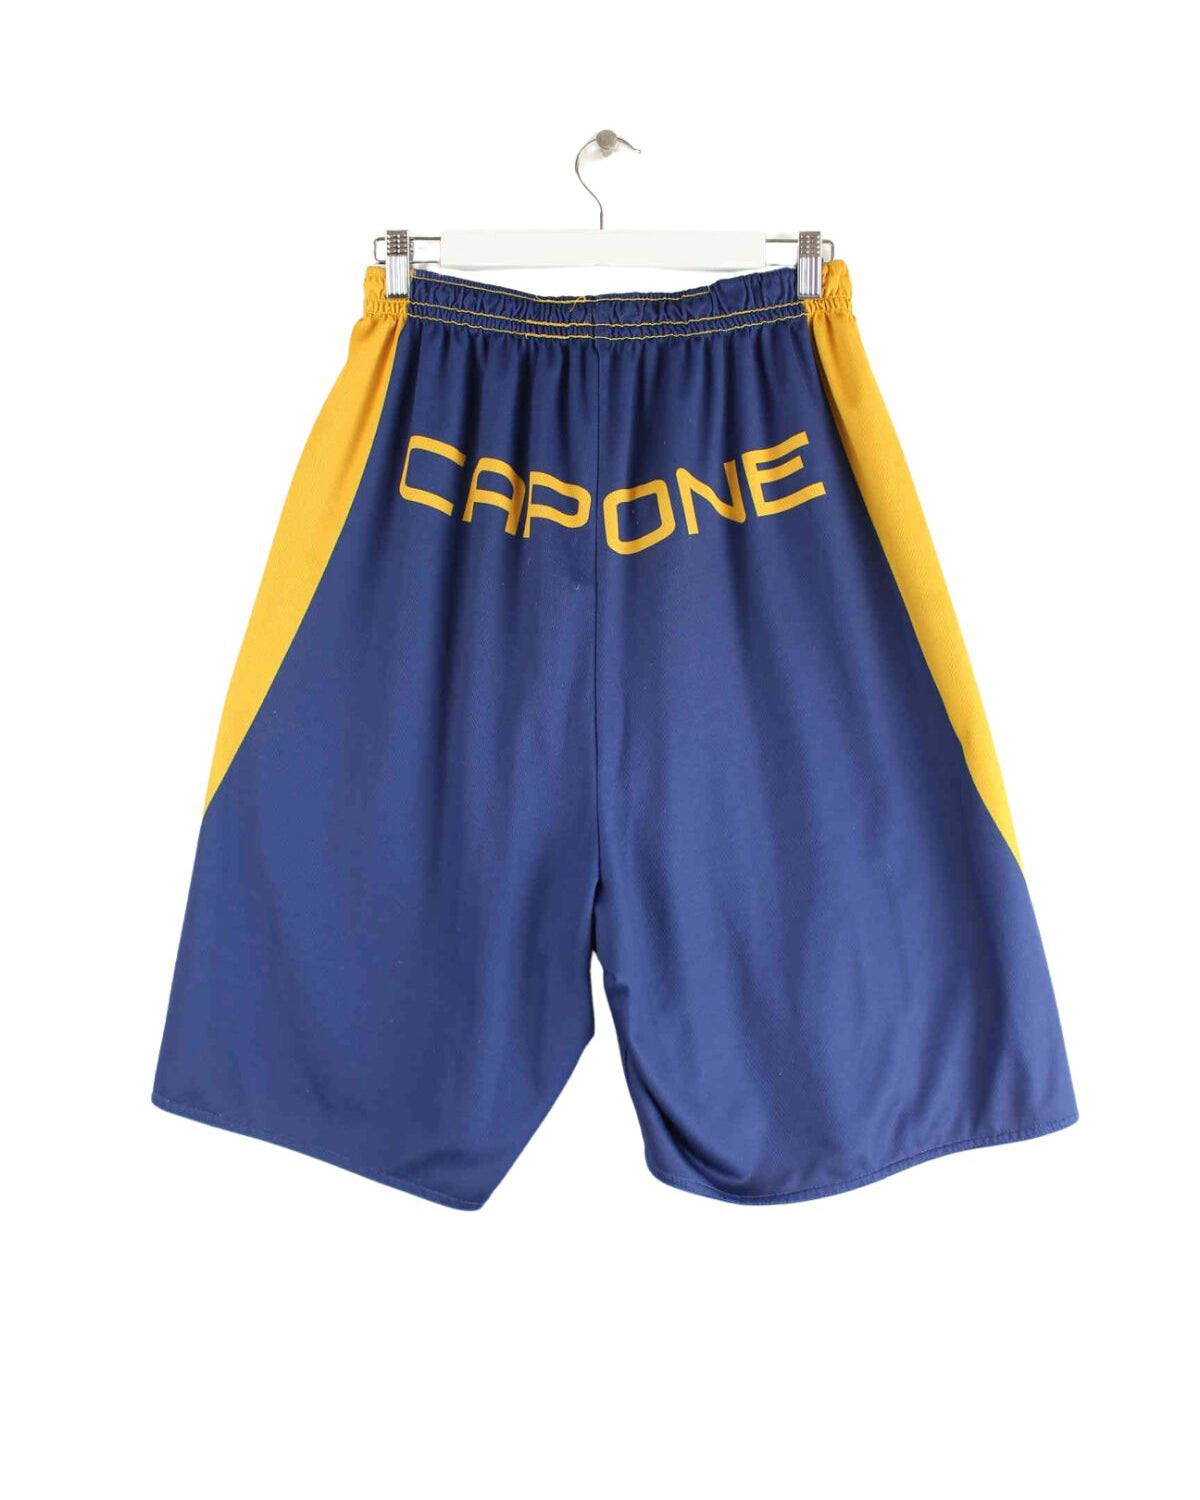 Vintage Wende Basketball Shorts Blau XL (back image)